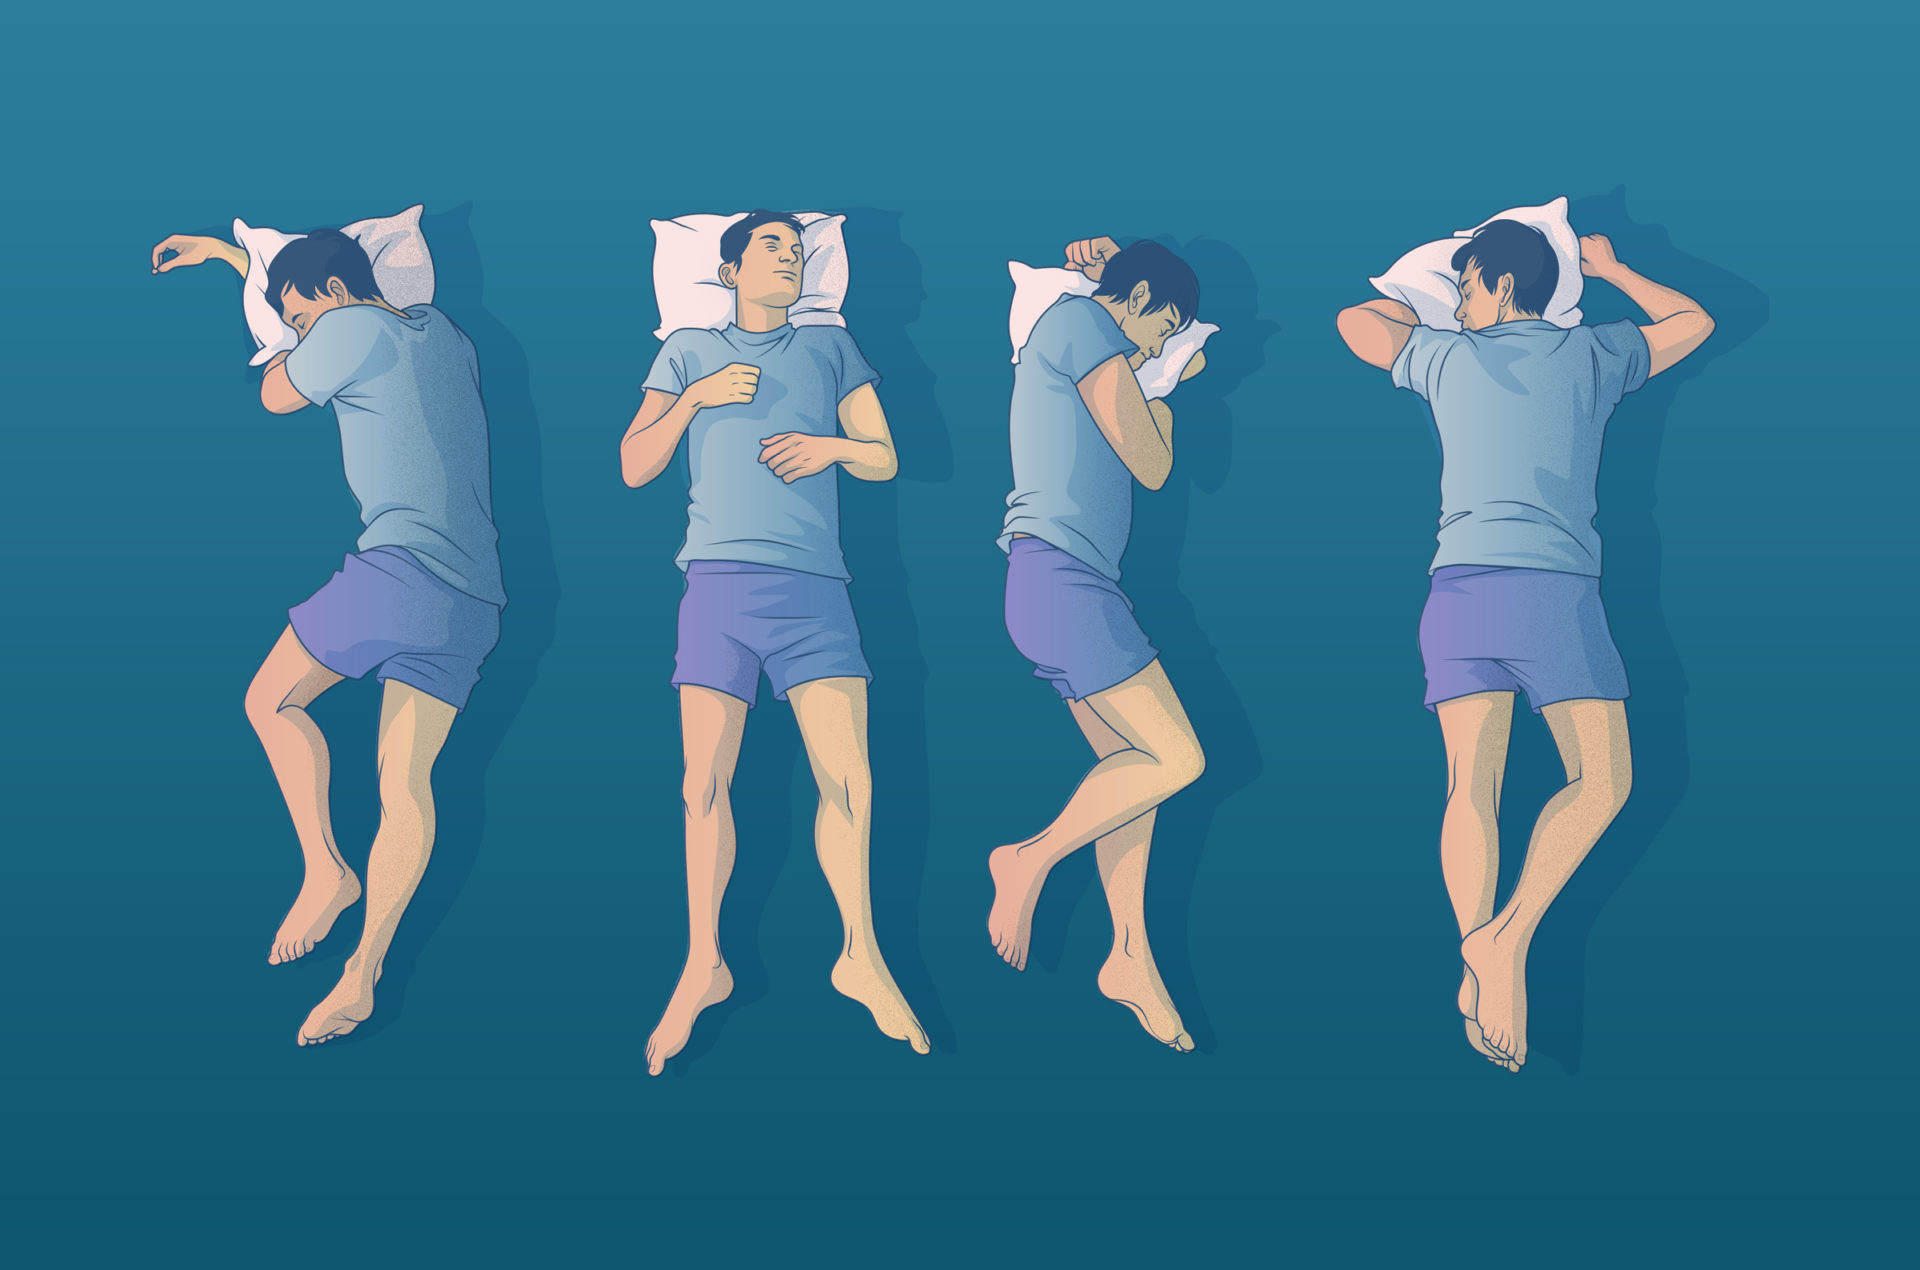 https://www.sleepcycle.com/wp-content/uploads/2022/02/the-sleep-positions-for-sleep-apnea-1920x1270.jpg